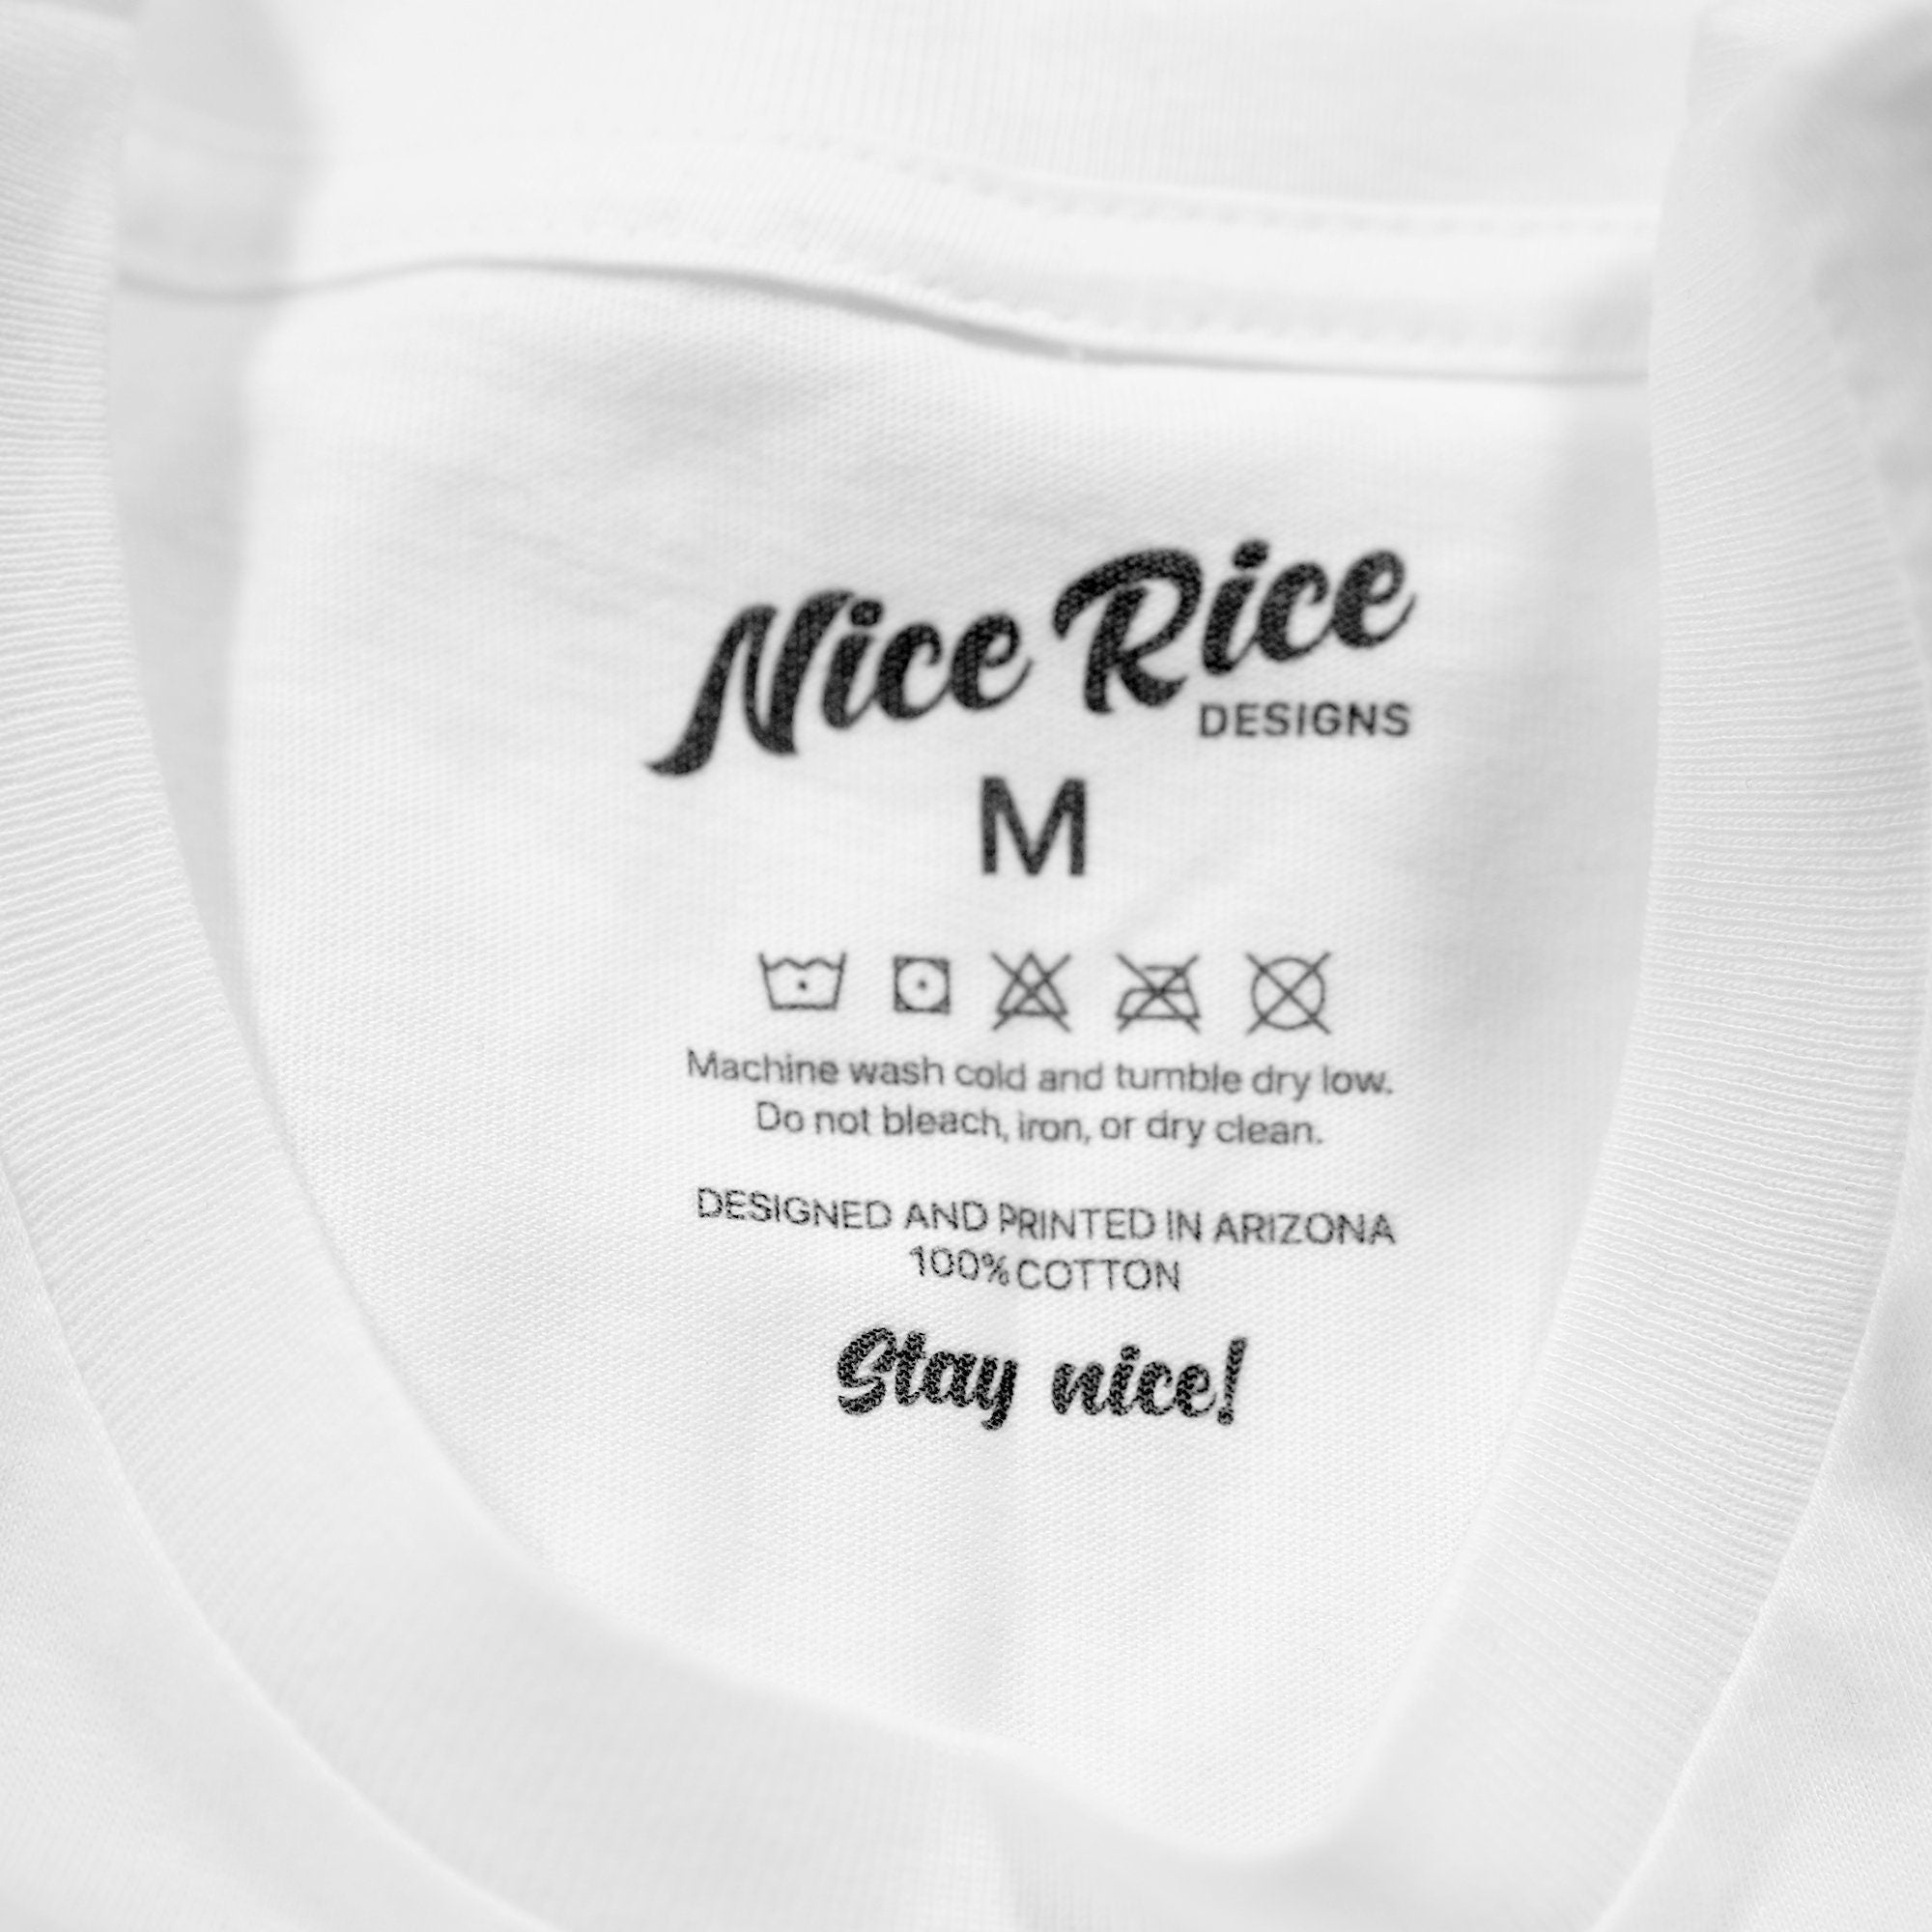 Erotic Friend Fiction in Wonderland Shirt by Nice Rice Designs